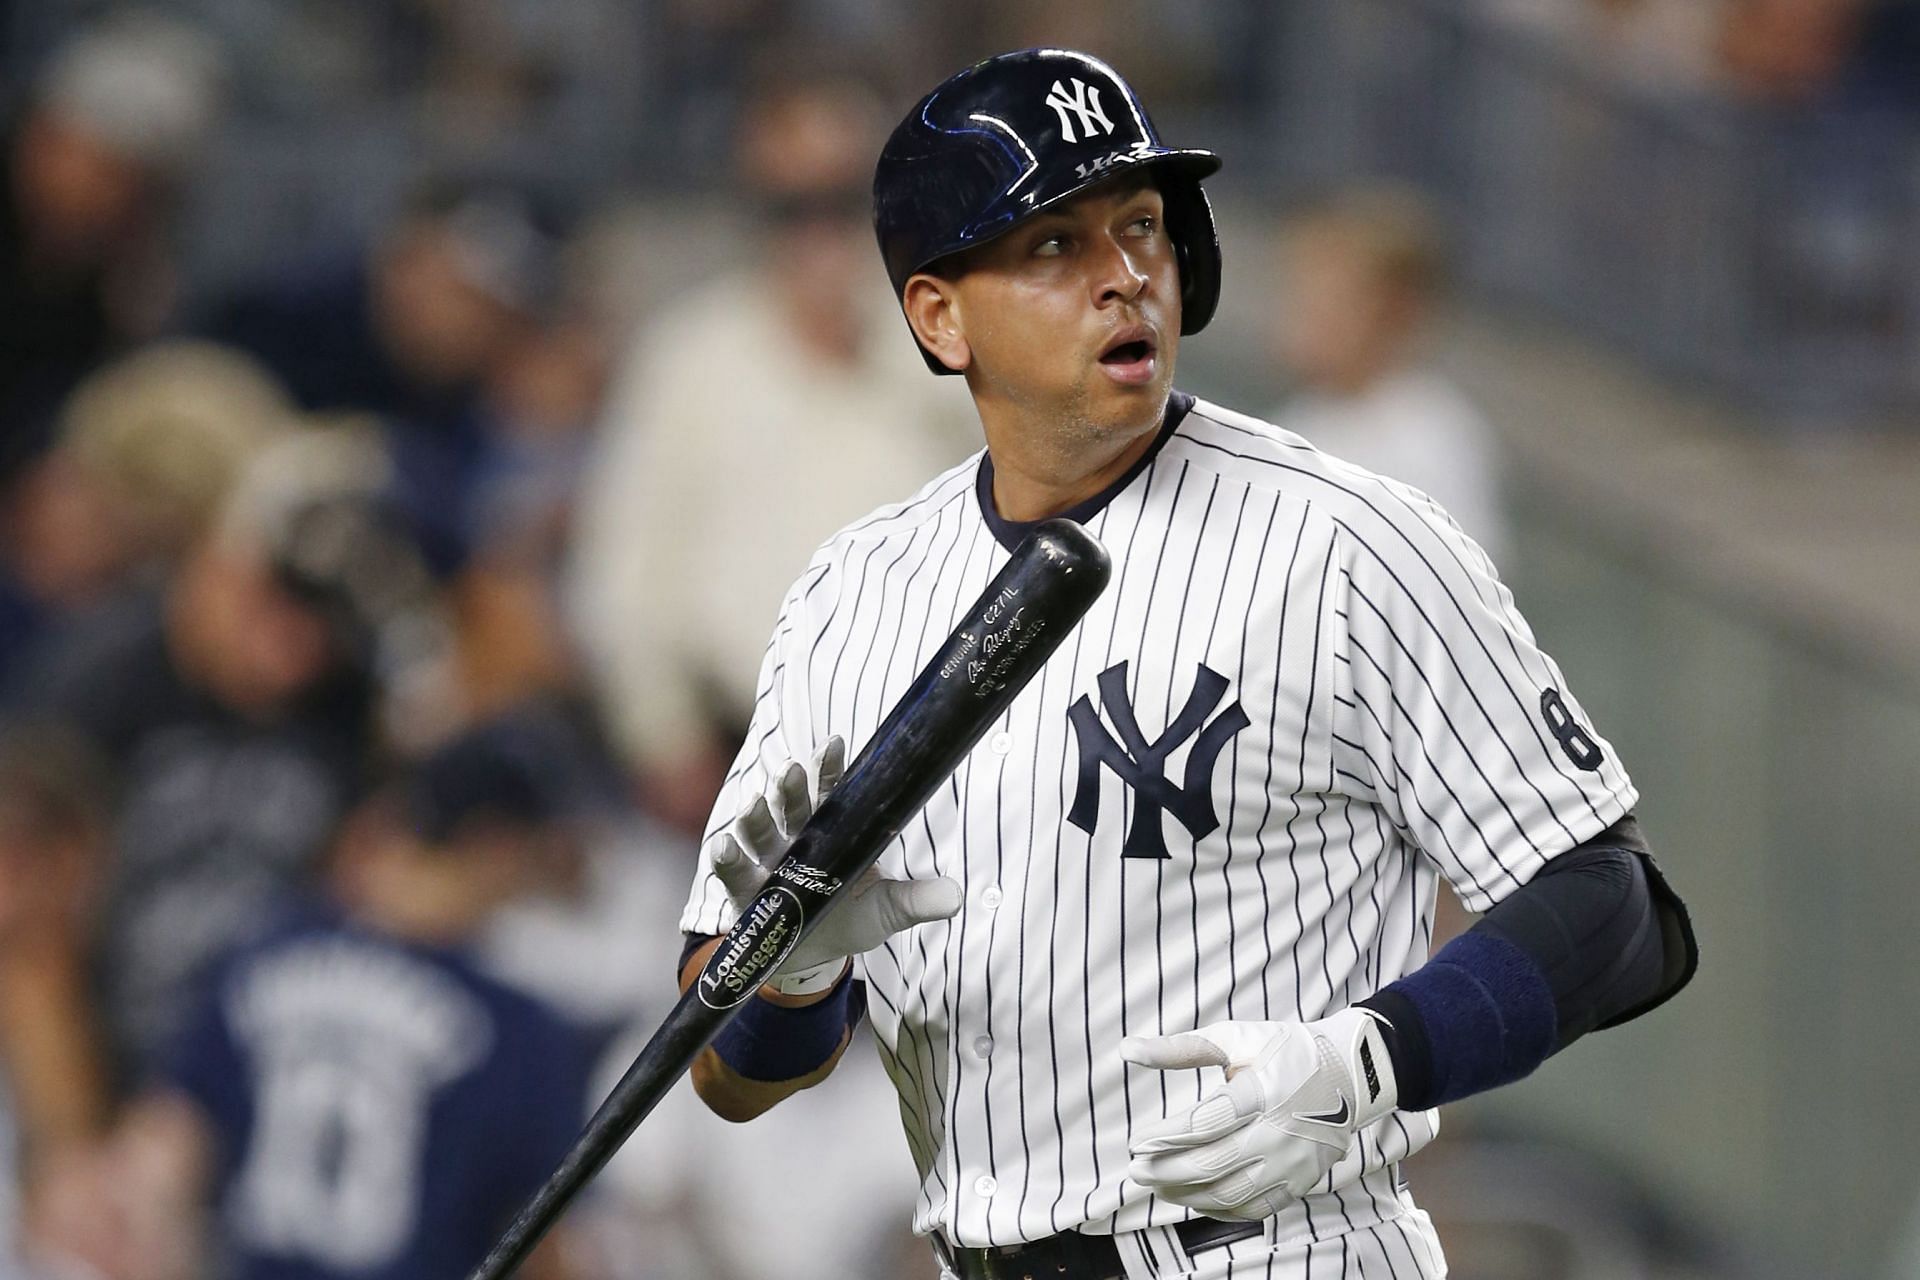 The New York Yankees star player- Alex Rodriguez